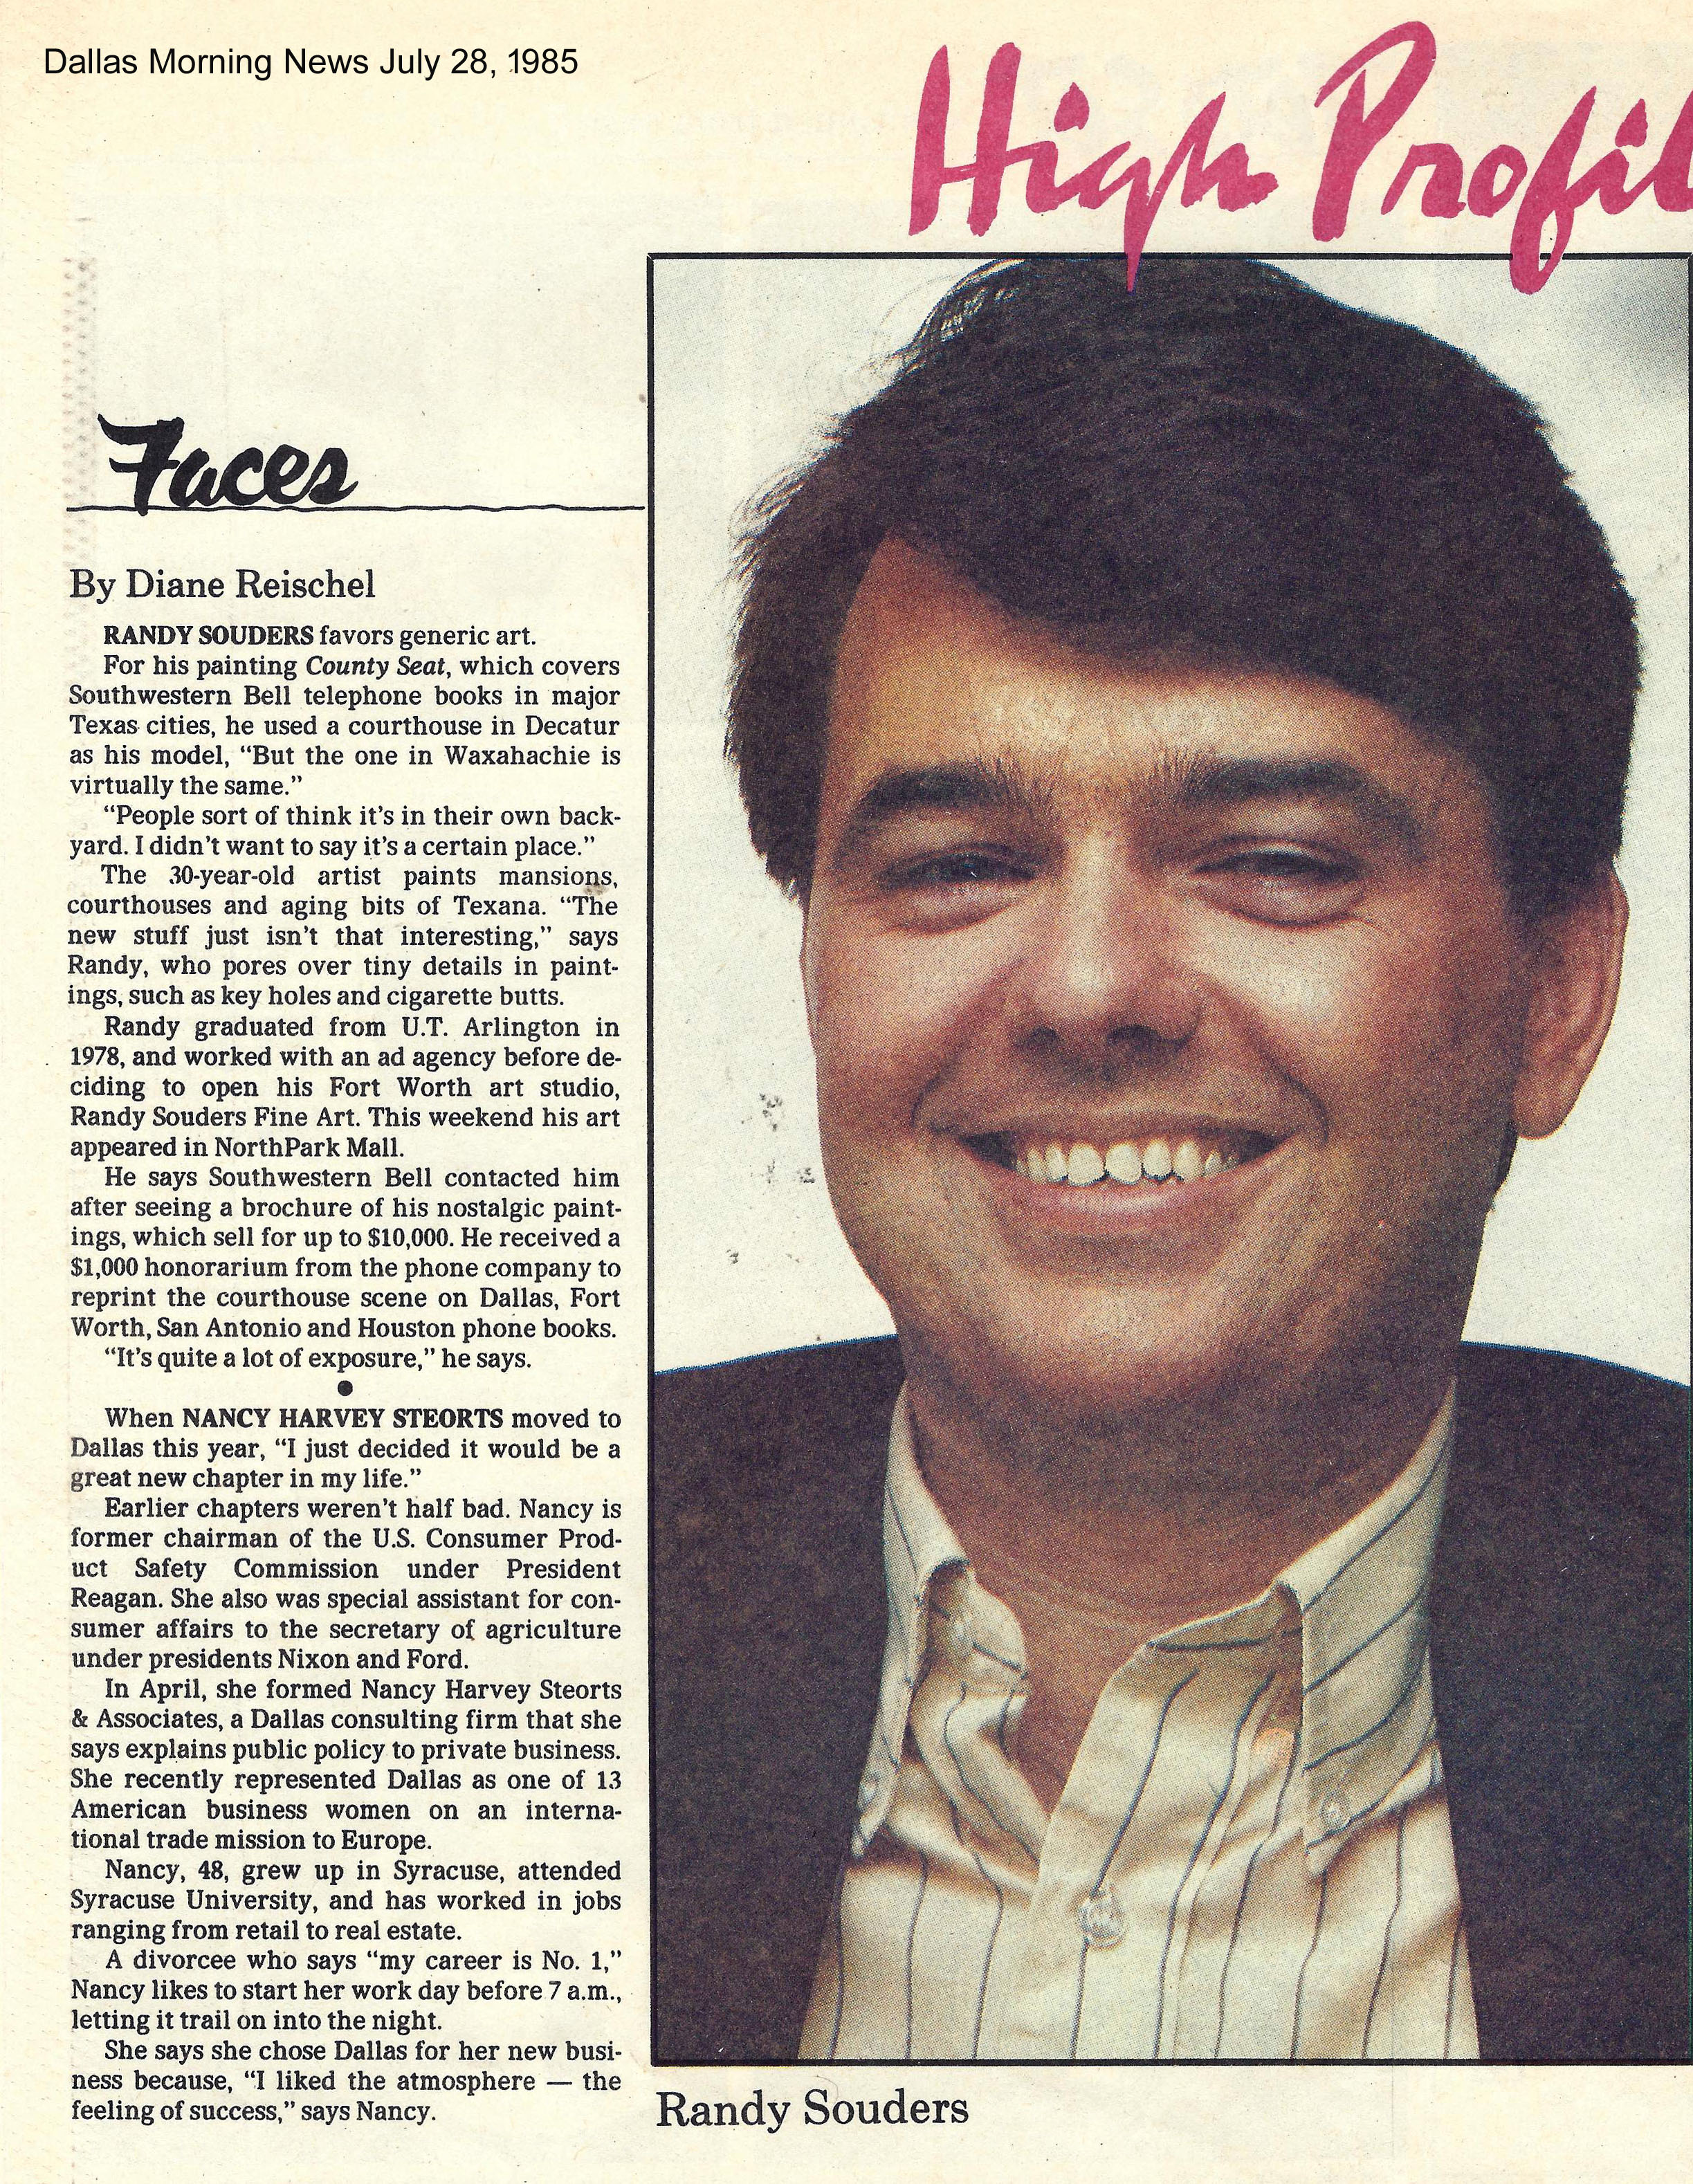 Dallas Morning News High Profile 7-28-1985.jpg (2212903 bytes)